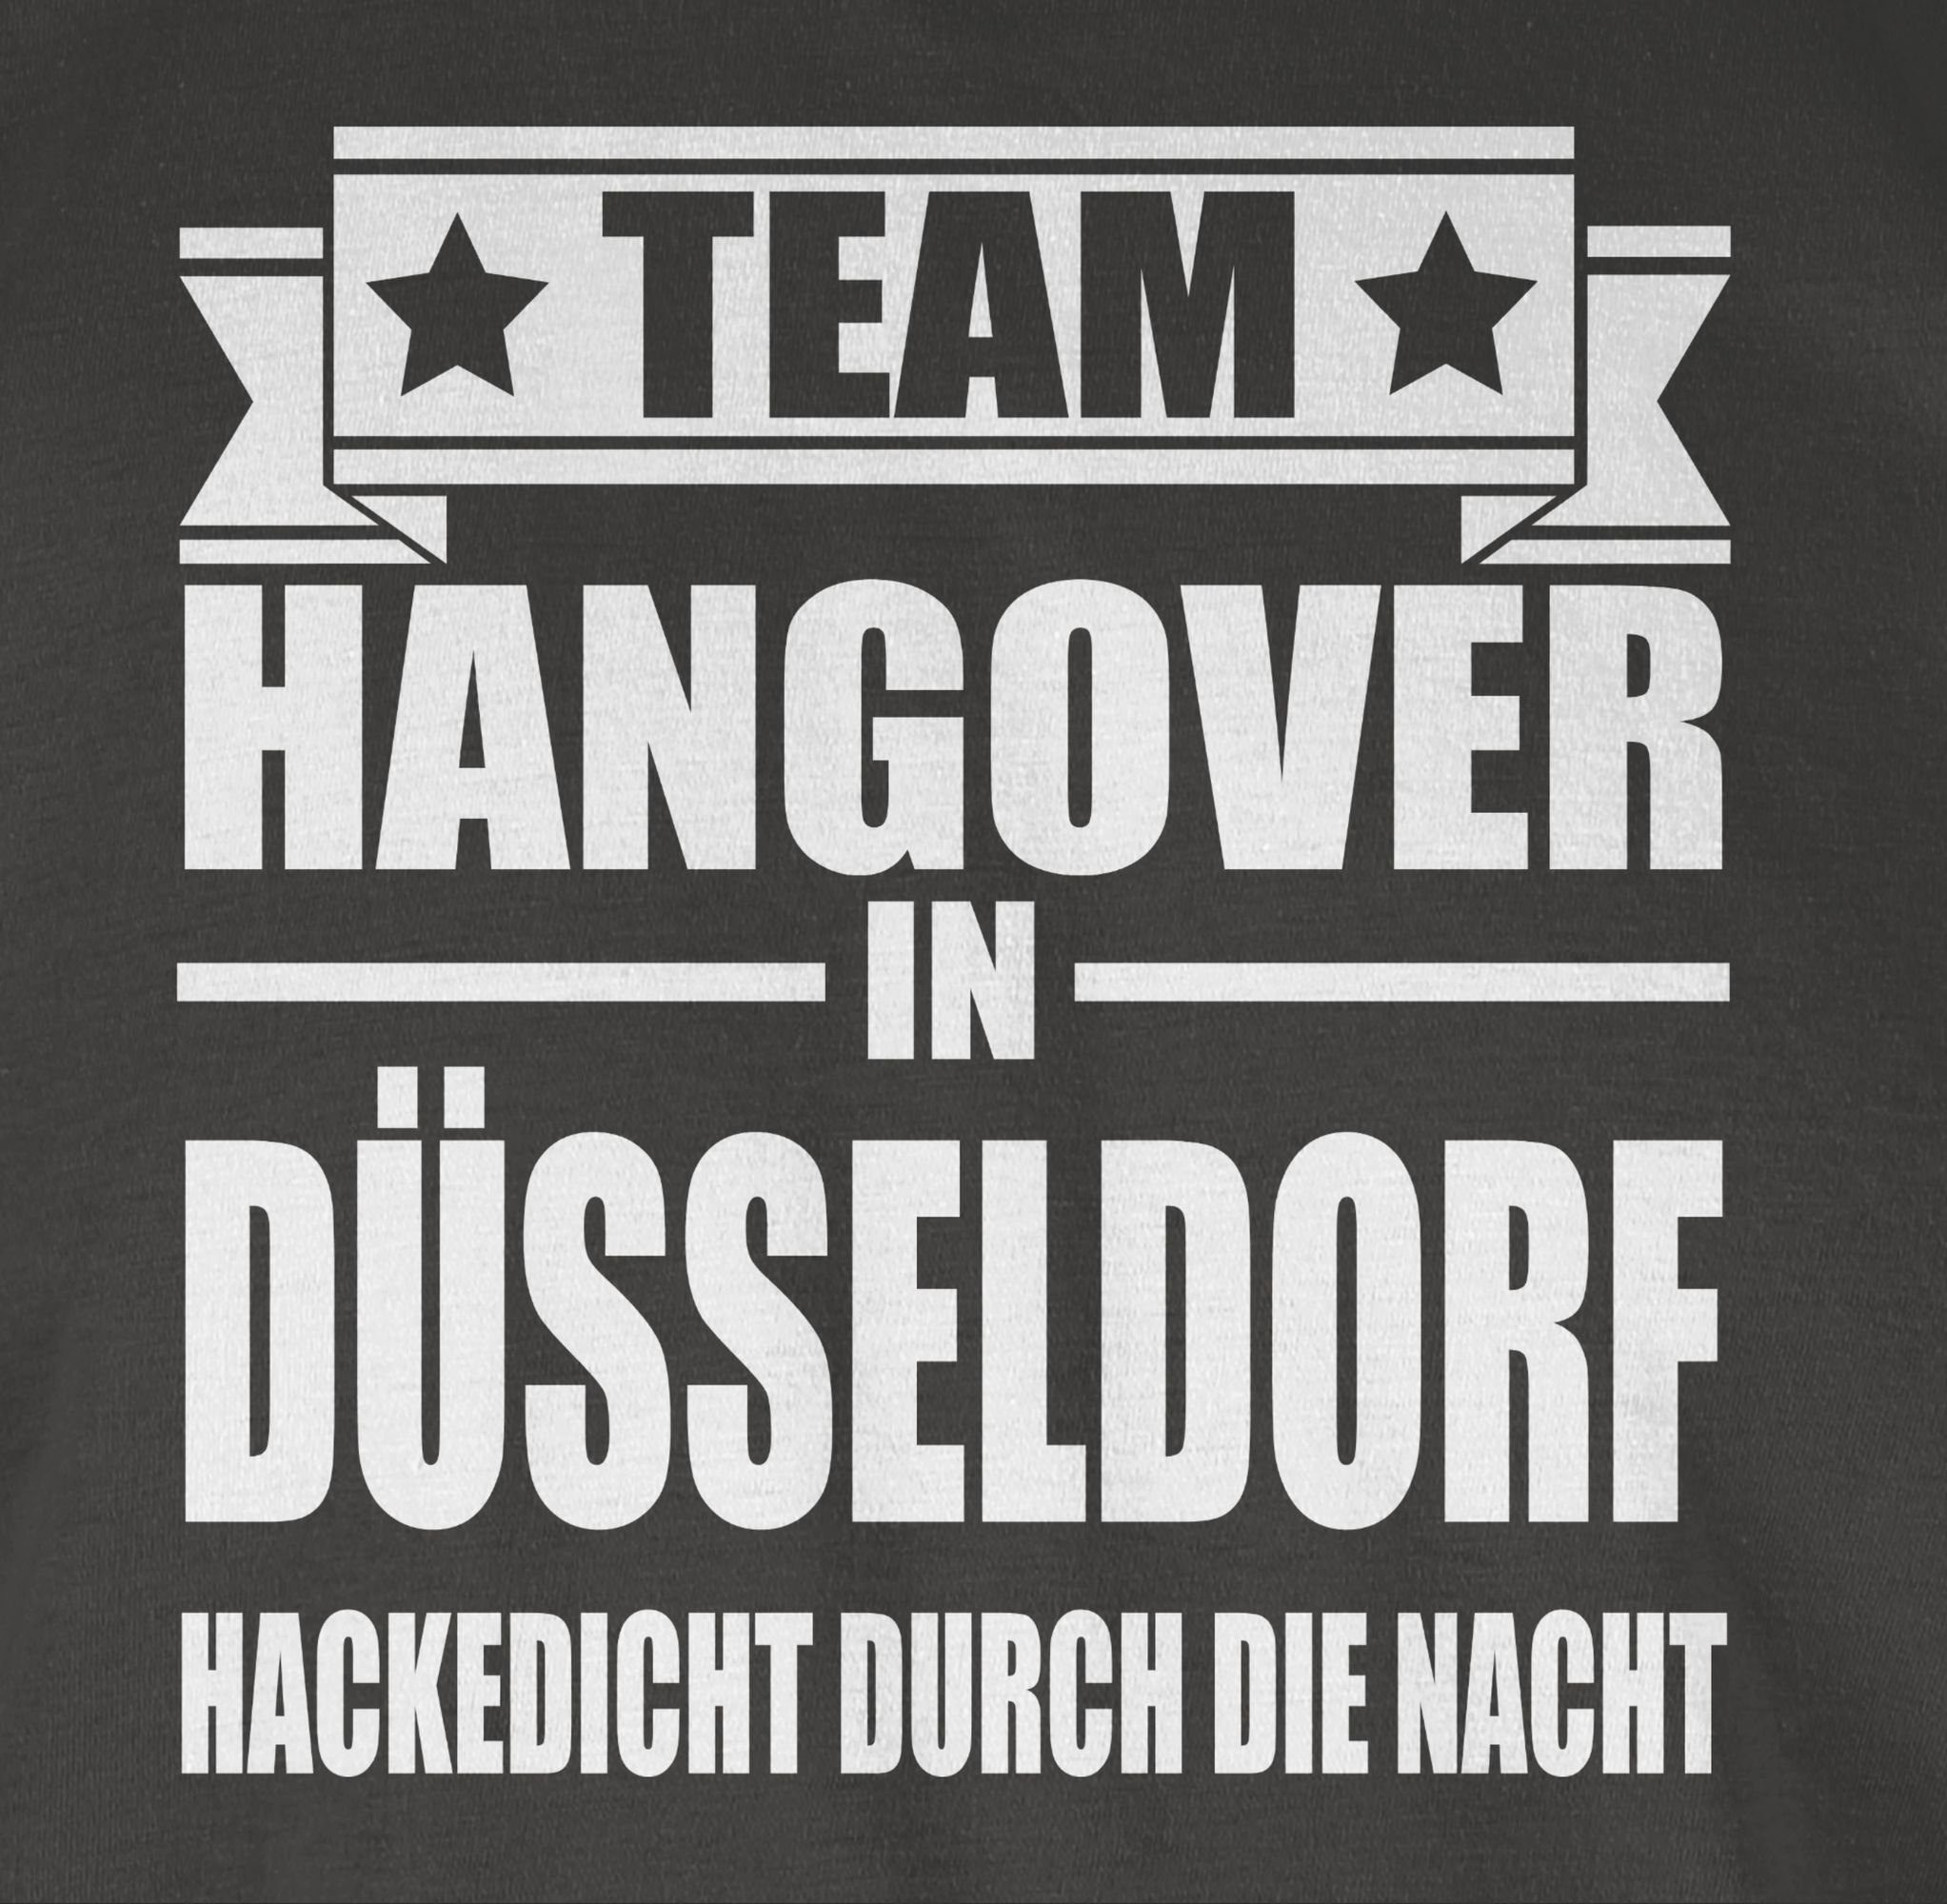 Shirtracer T-Shirt JGA Dunkelgrau Team Hangover 02 Männer Düsseldorf